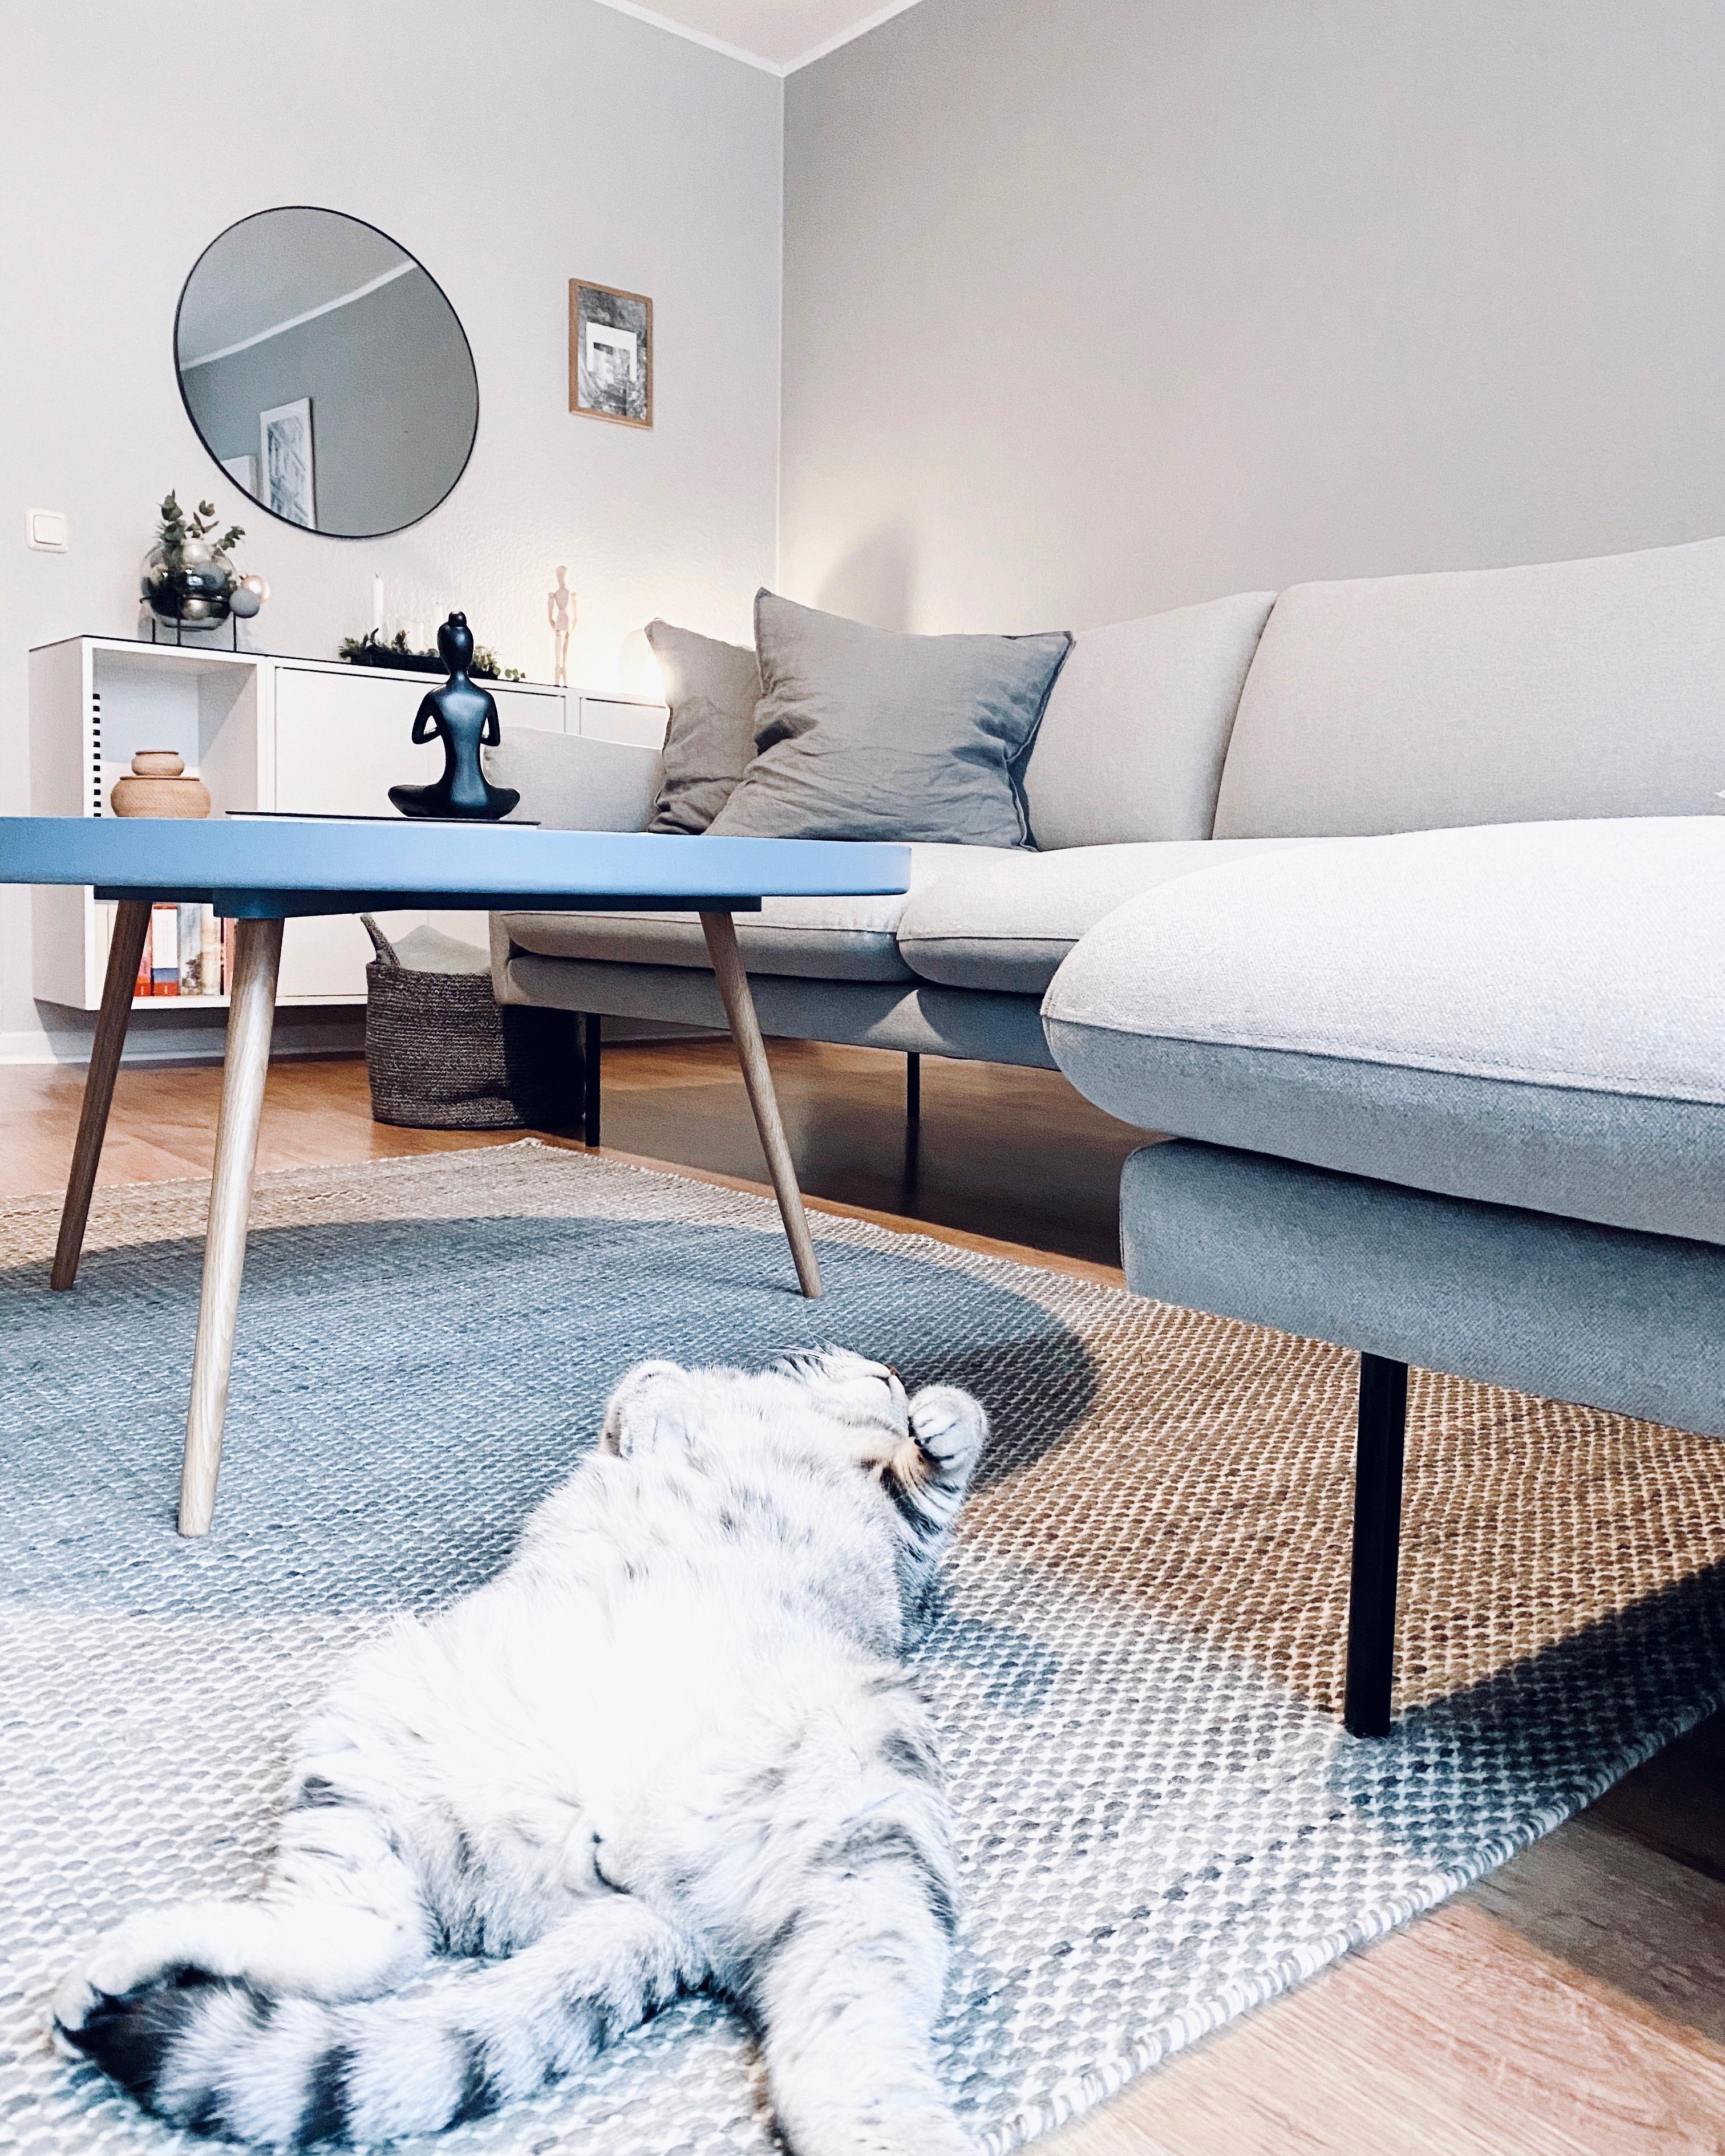 Lazy Sunday 🖤
#interior #hygge #nordicroom #scandinavianliving ##mynordicroom #scandinaviandesign #livingroom #greylove